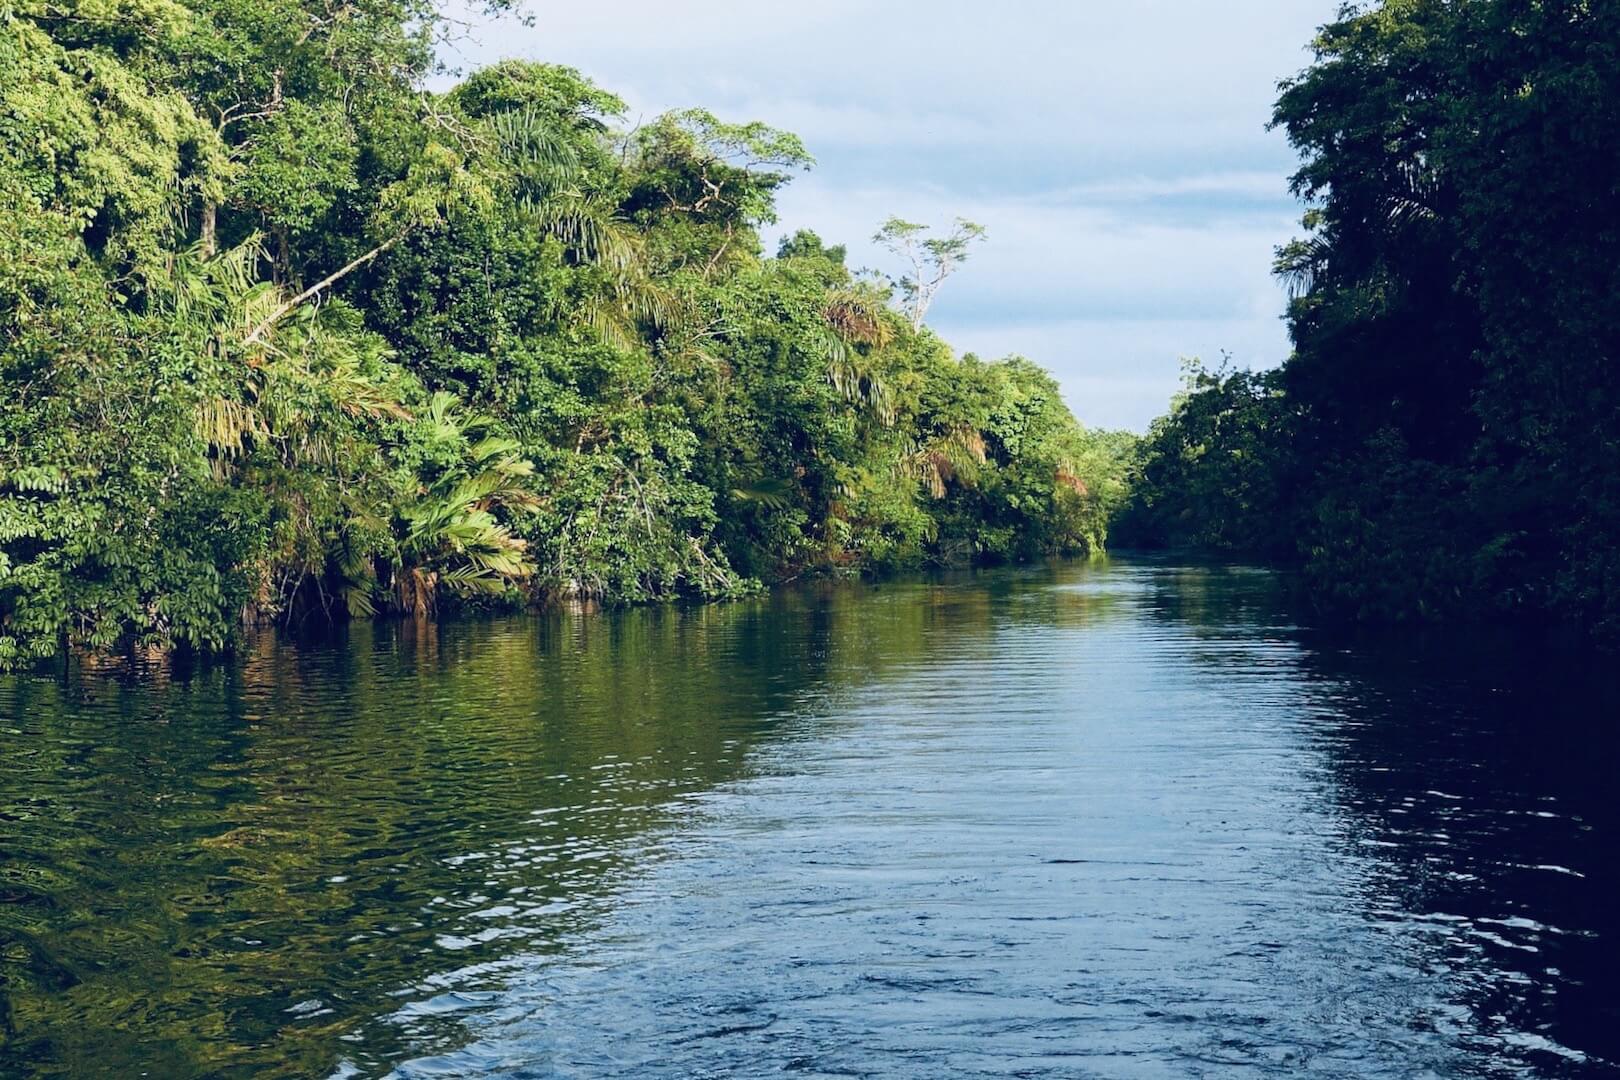 The Noriega Tapes Chapter 01 - Costa De Miskitos River Through Jungle